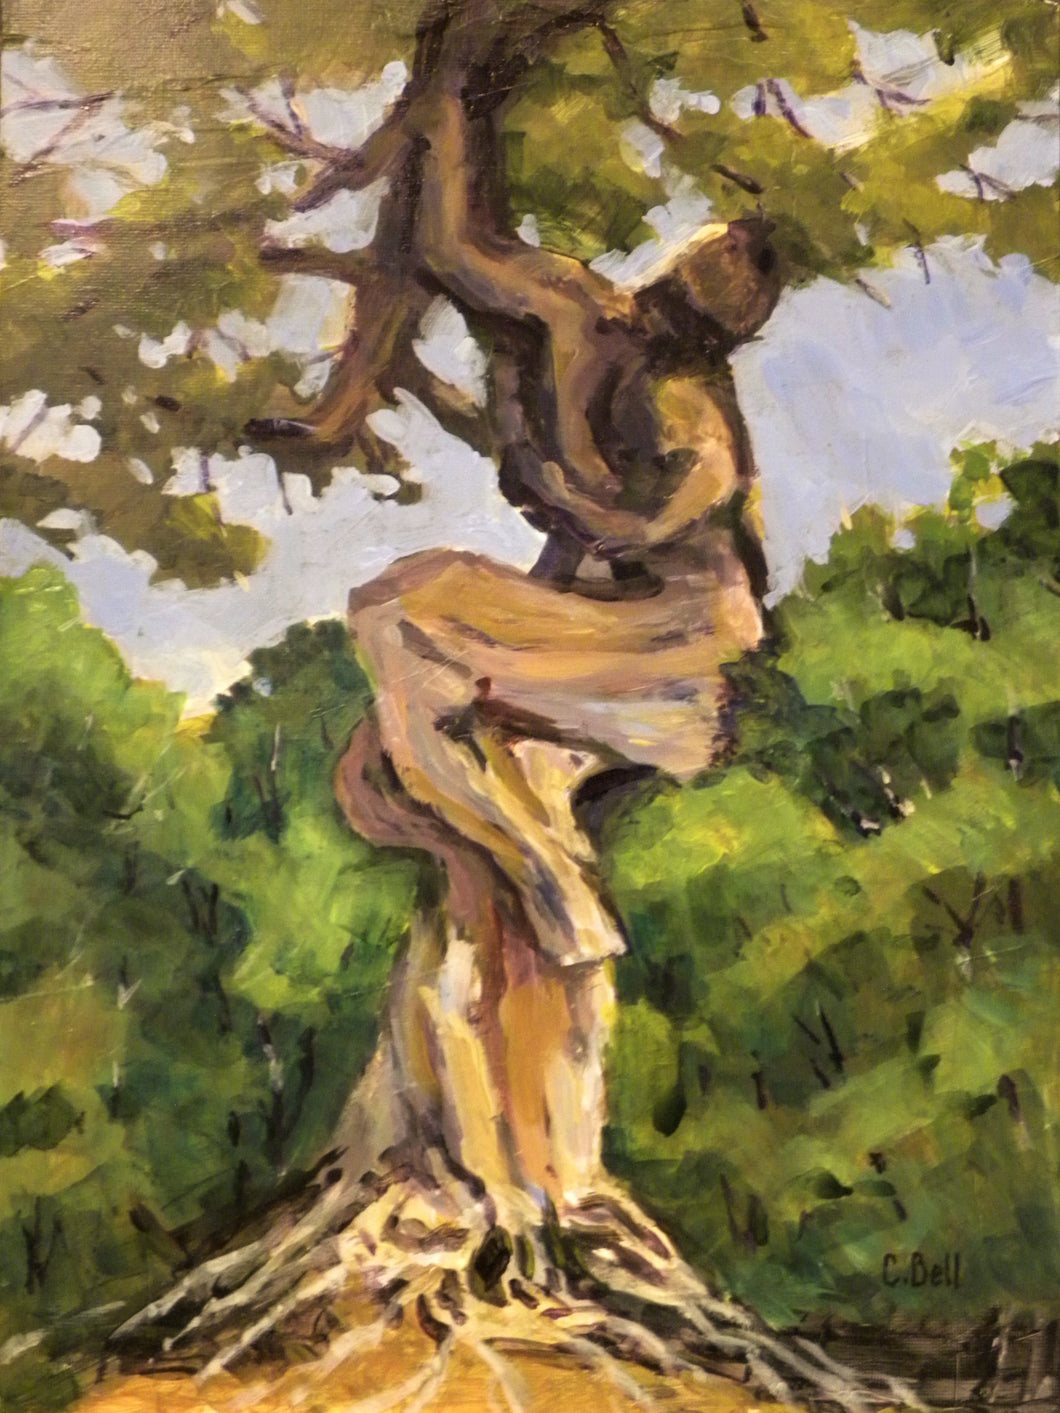 Colin Bell - Tree Dancer